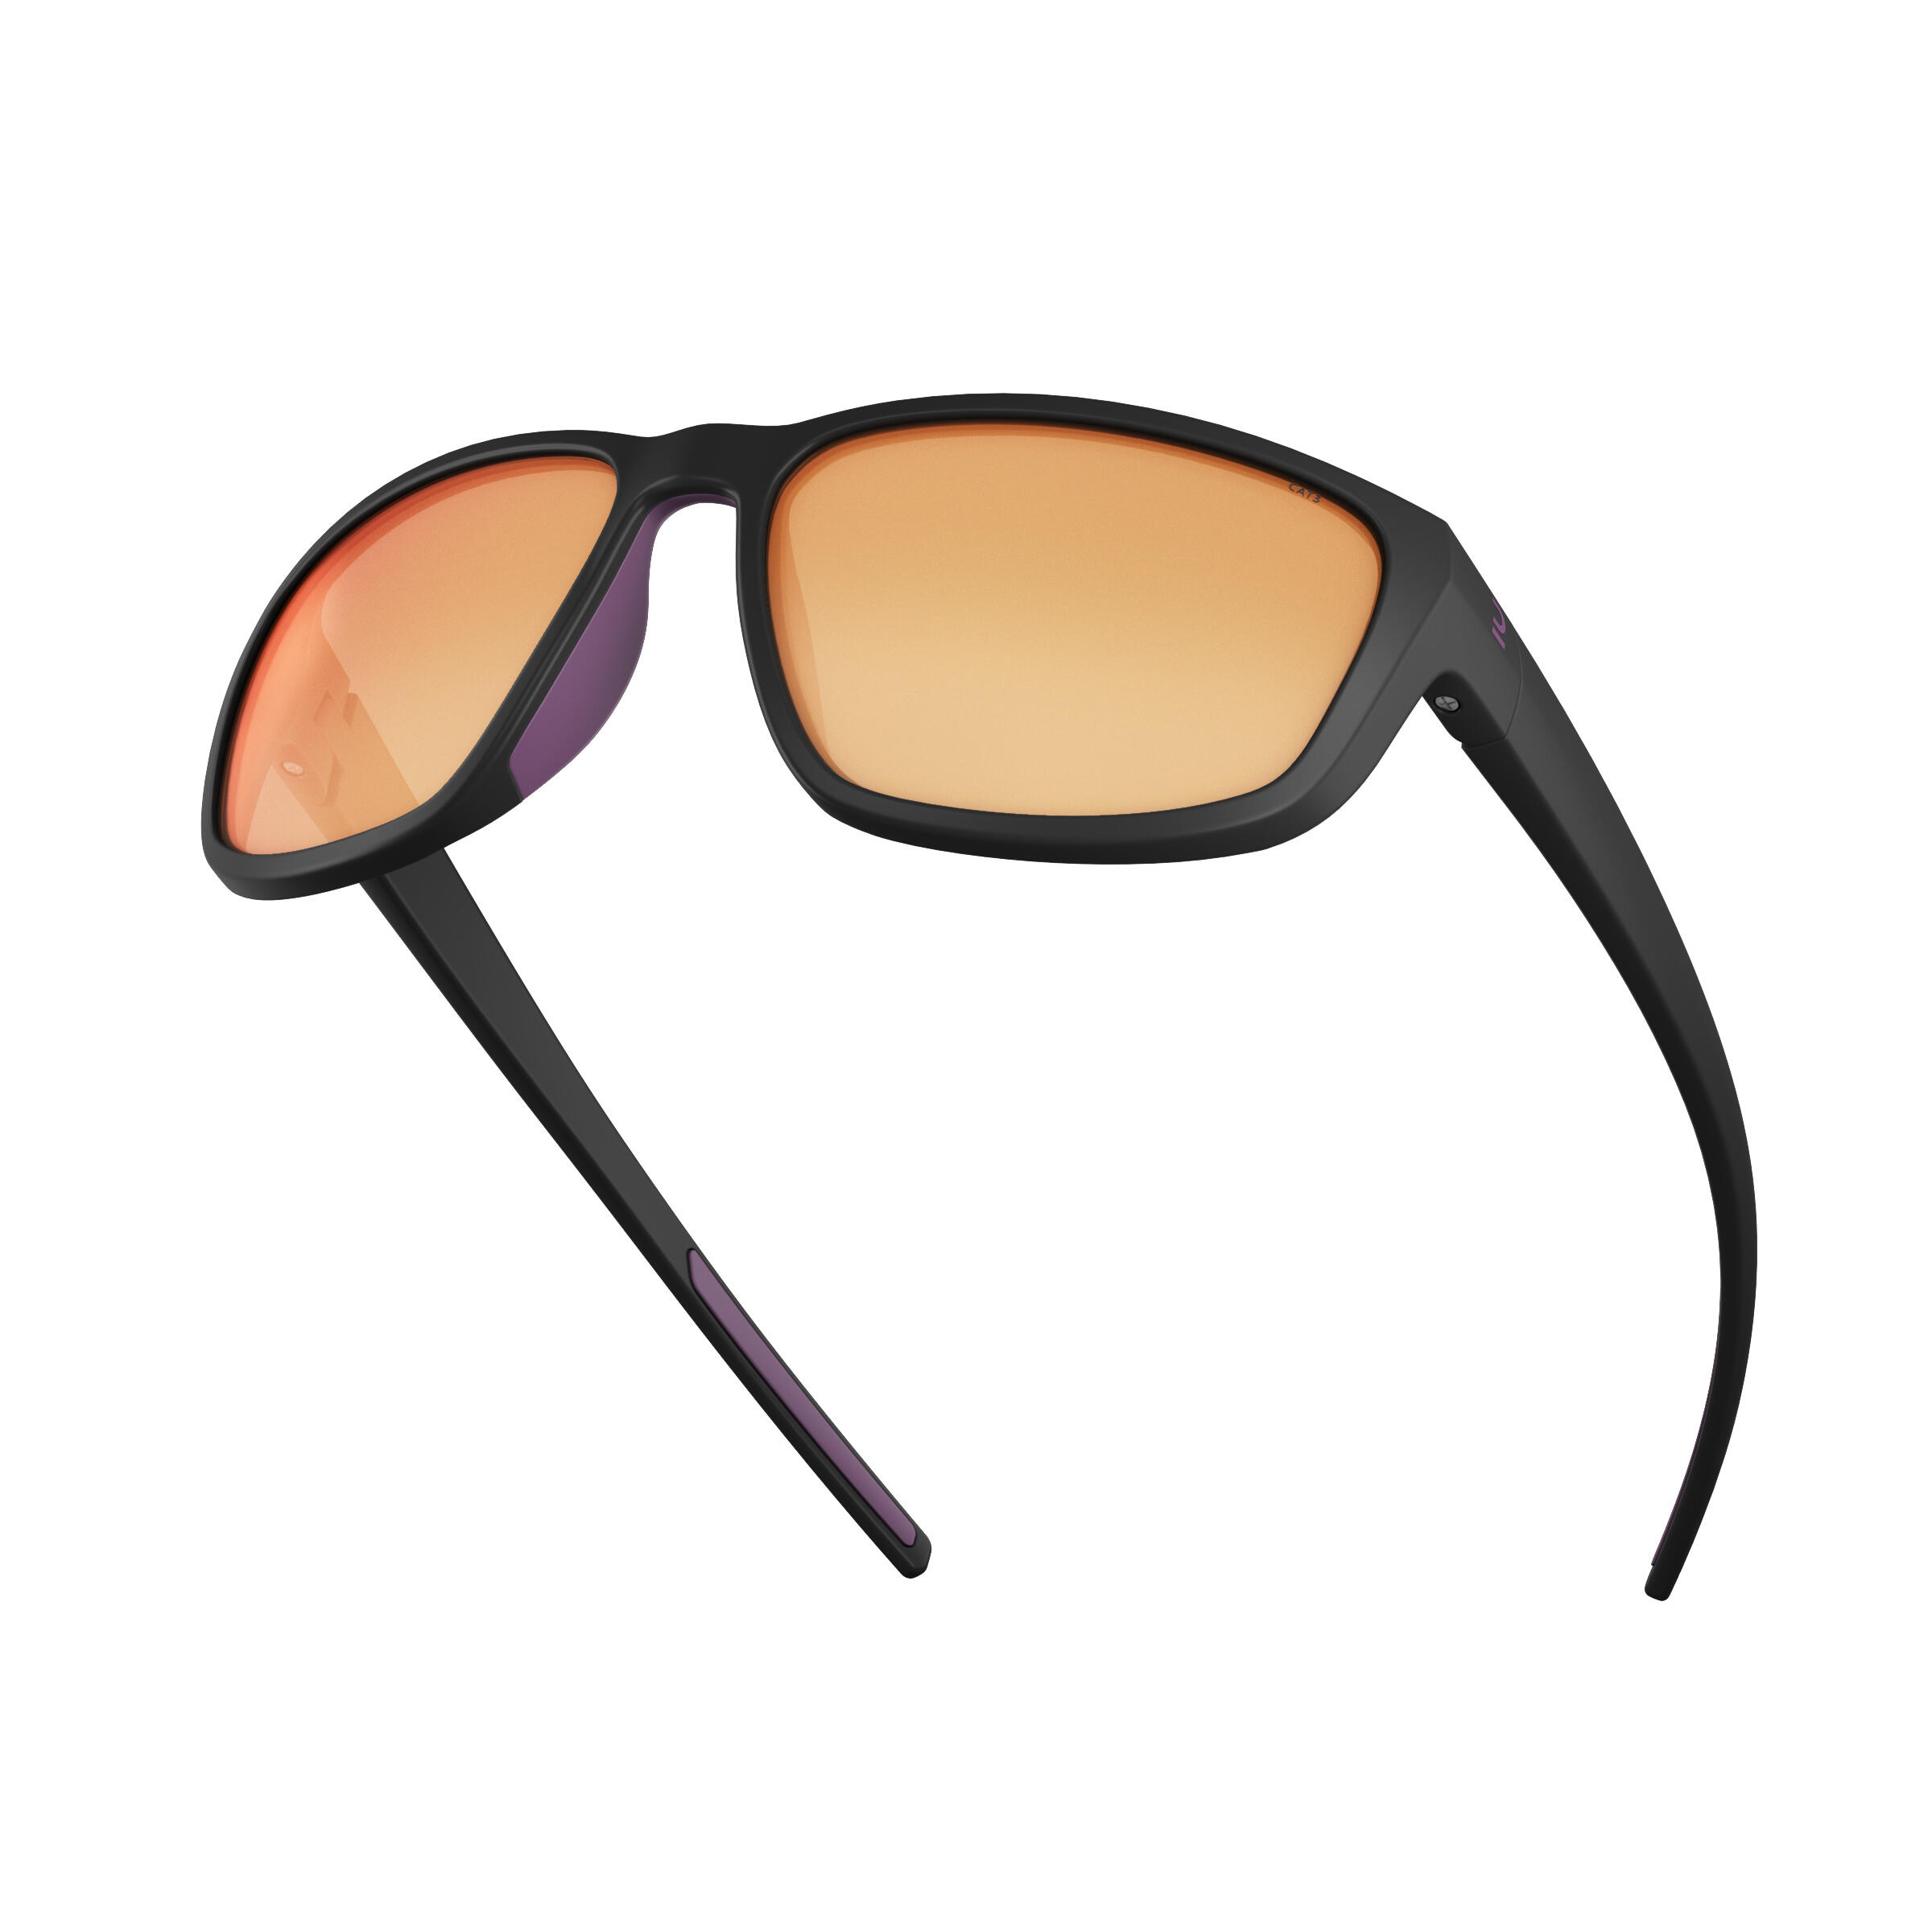 Women's Hiking Sunglasses - MH550W - Category 3 7/11